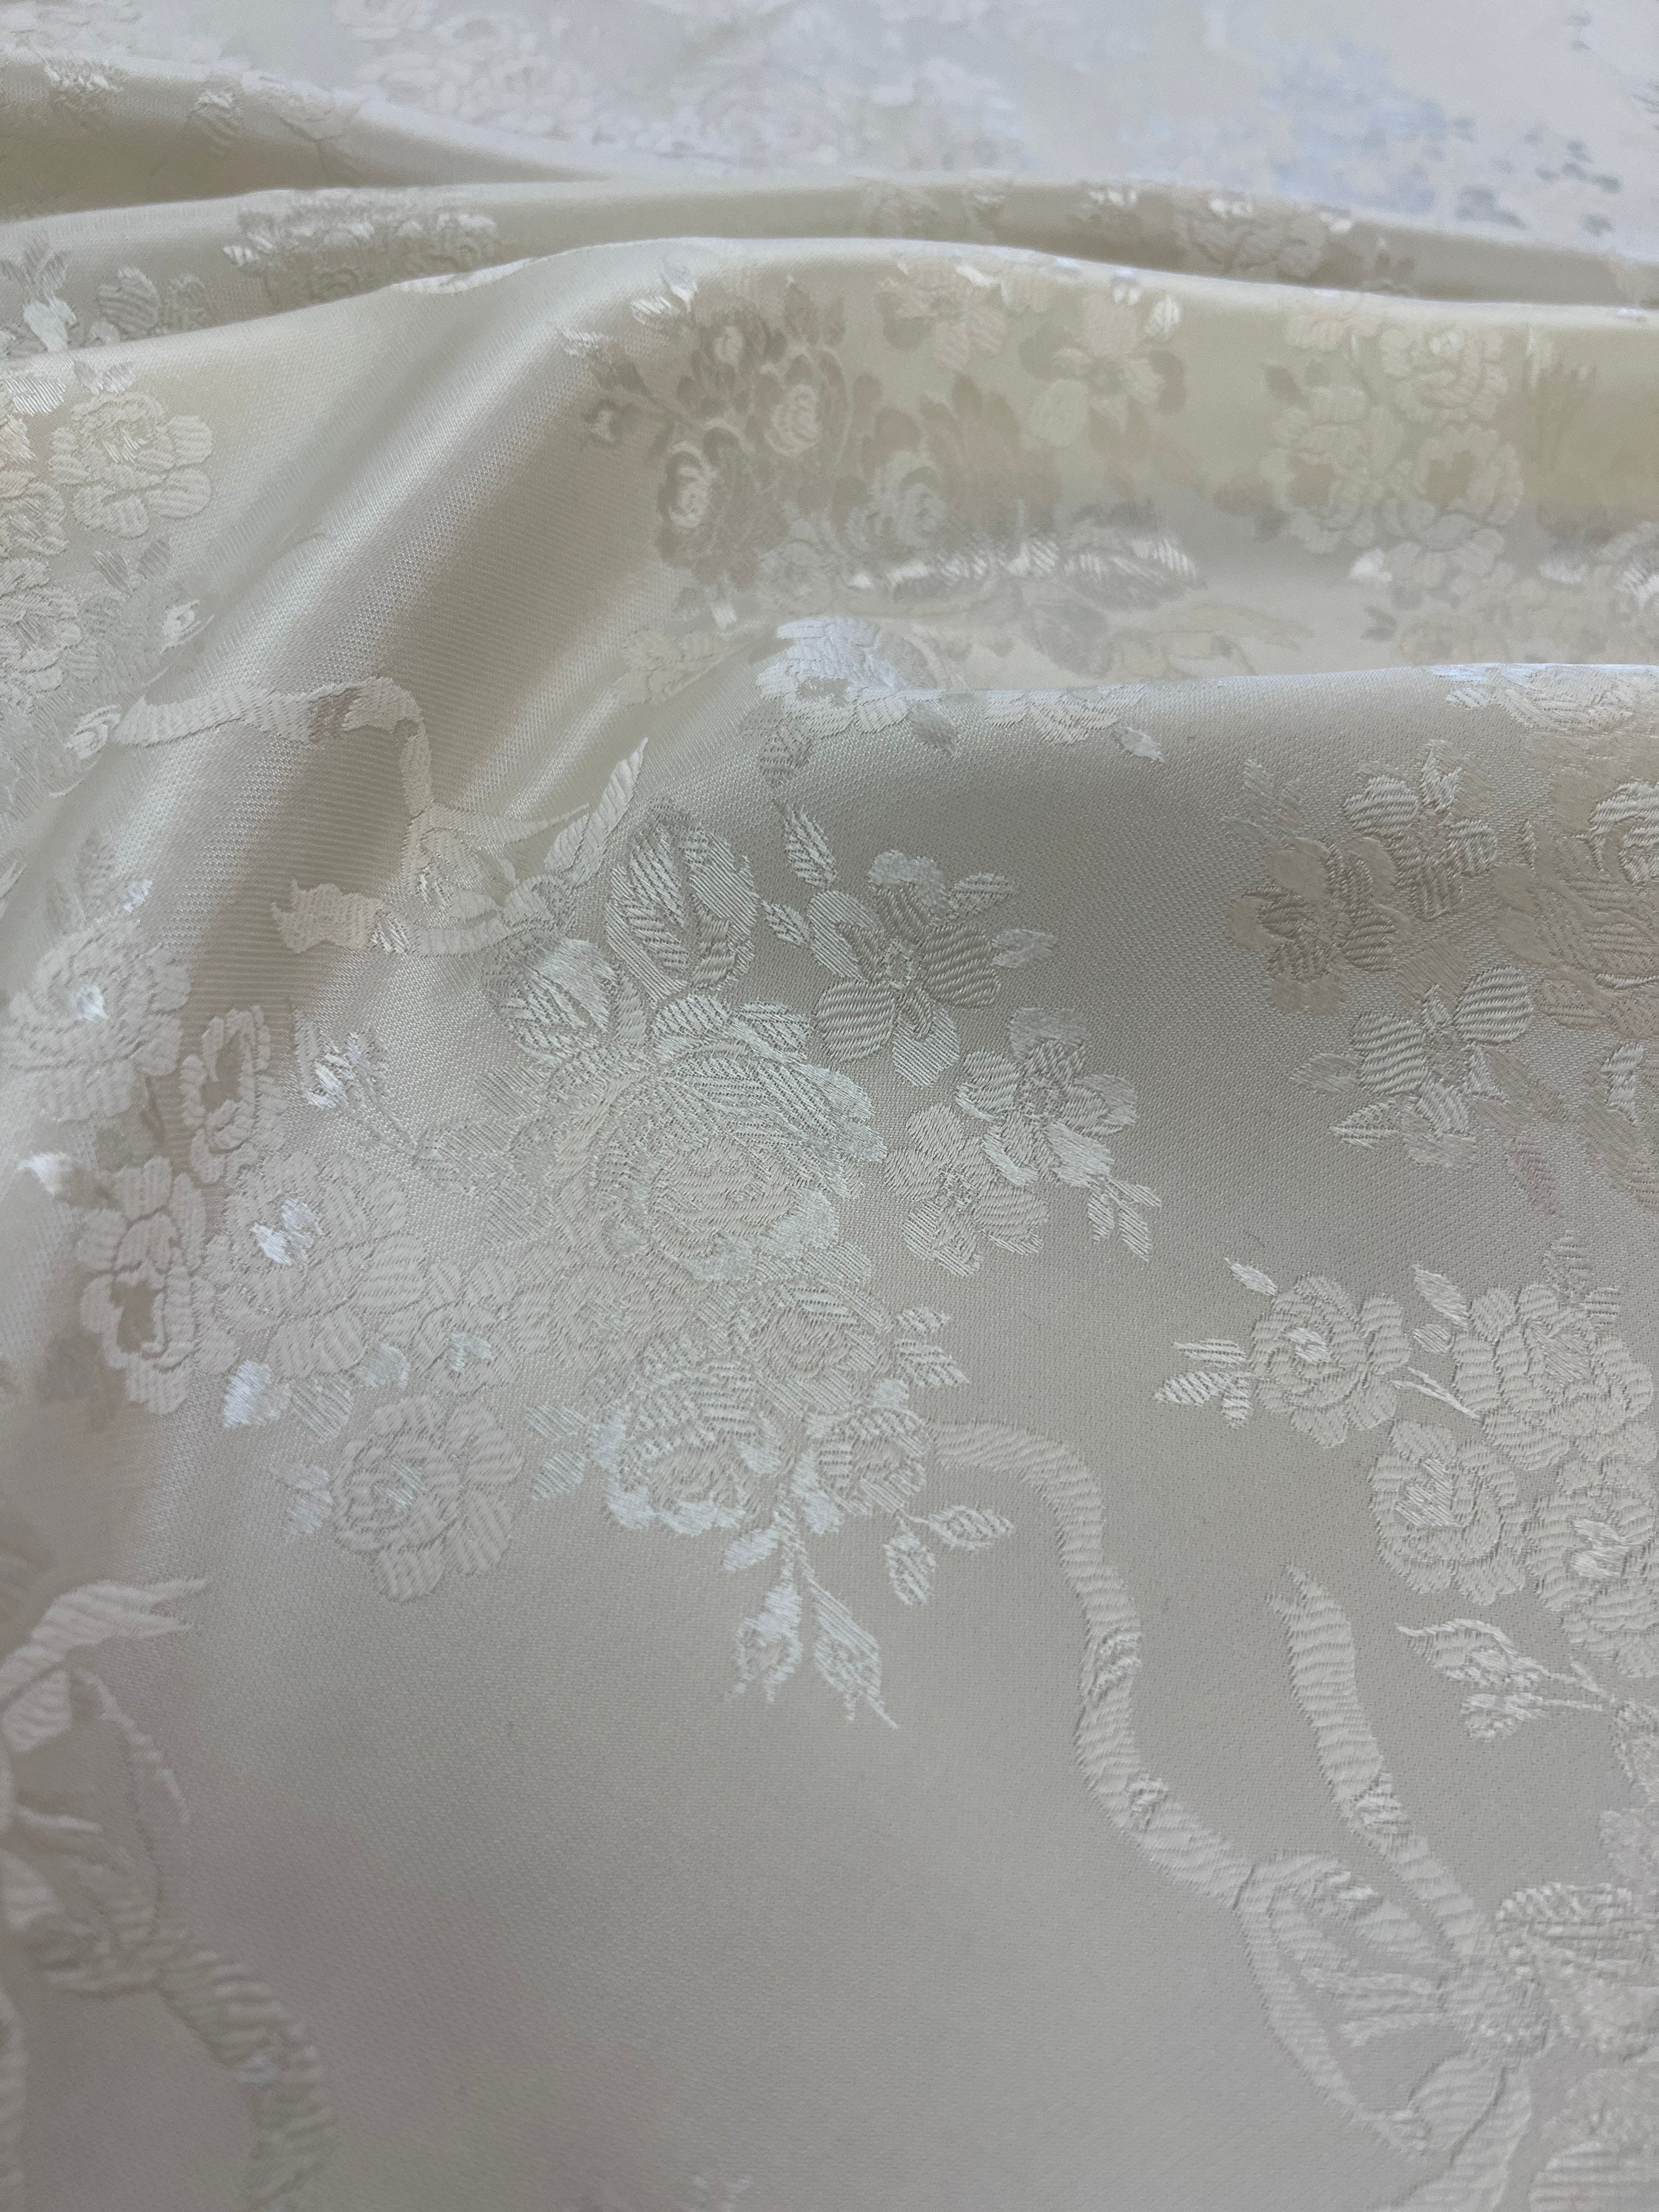 Silk Jacquard Fabric: 100% Silk Fabrics from Italy, SKU 00072388